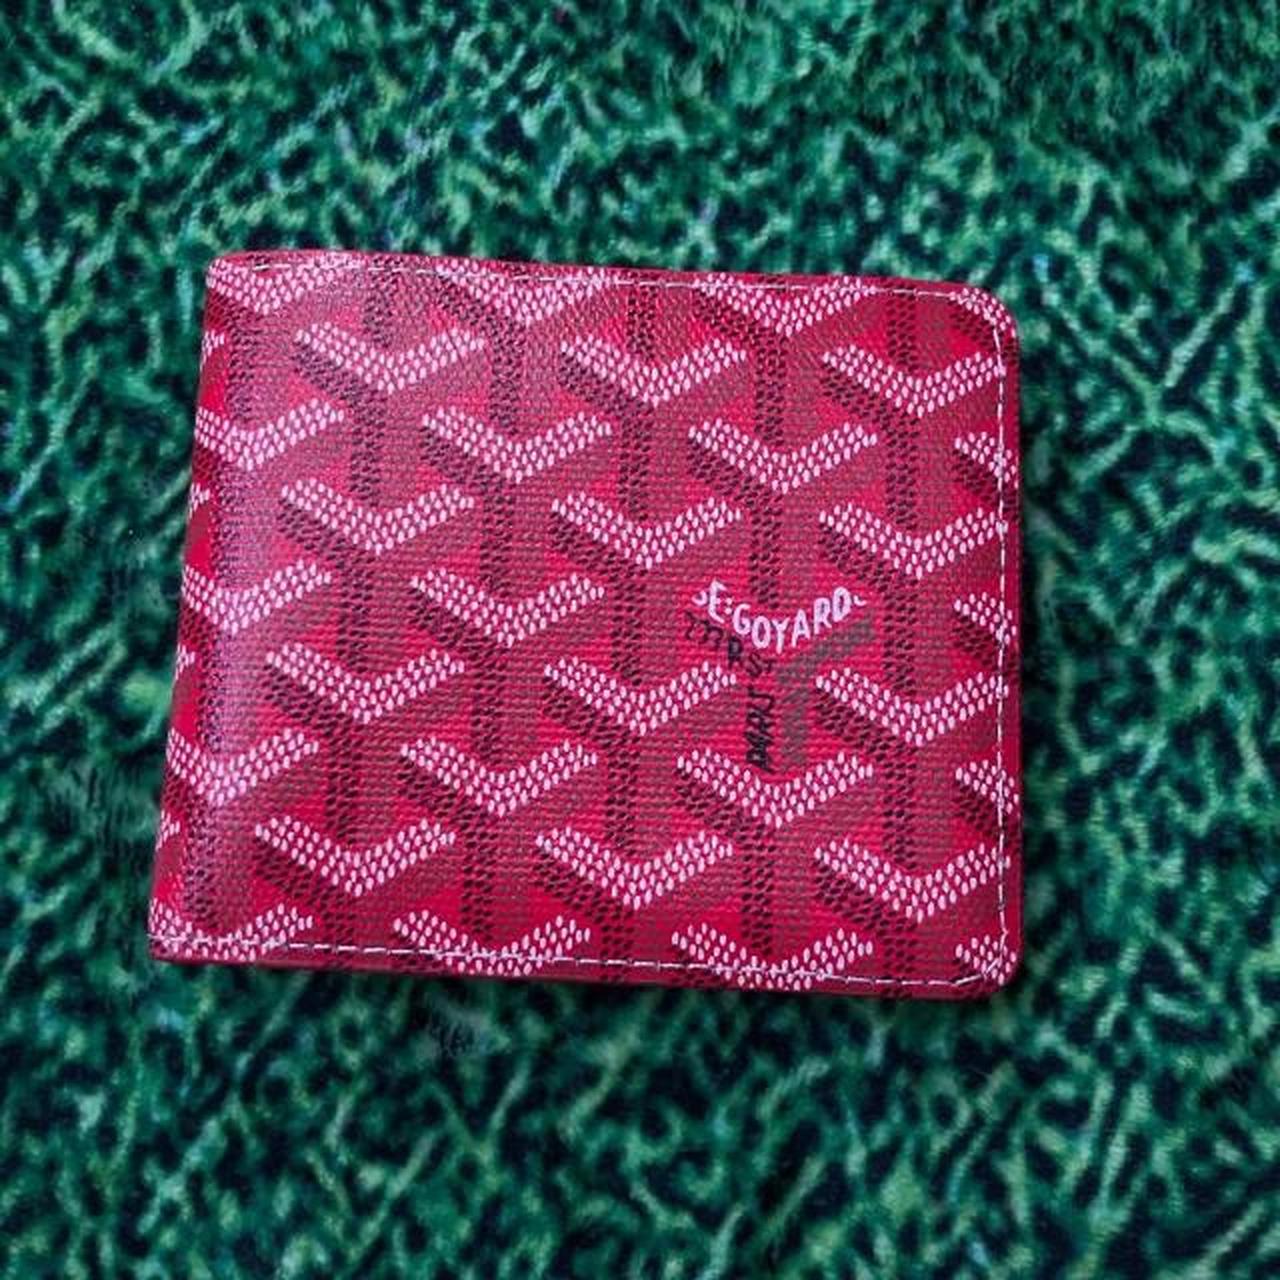 Goyard Men's Wallet - Red